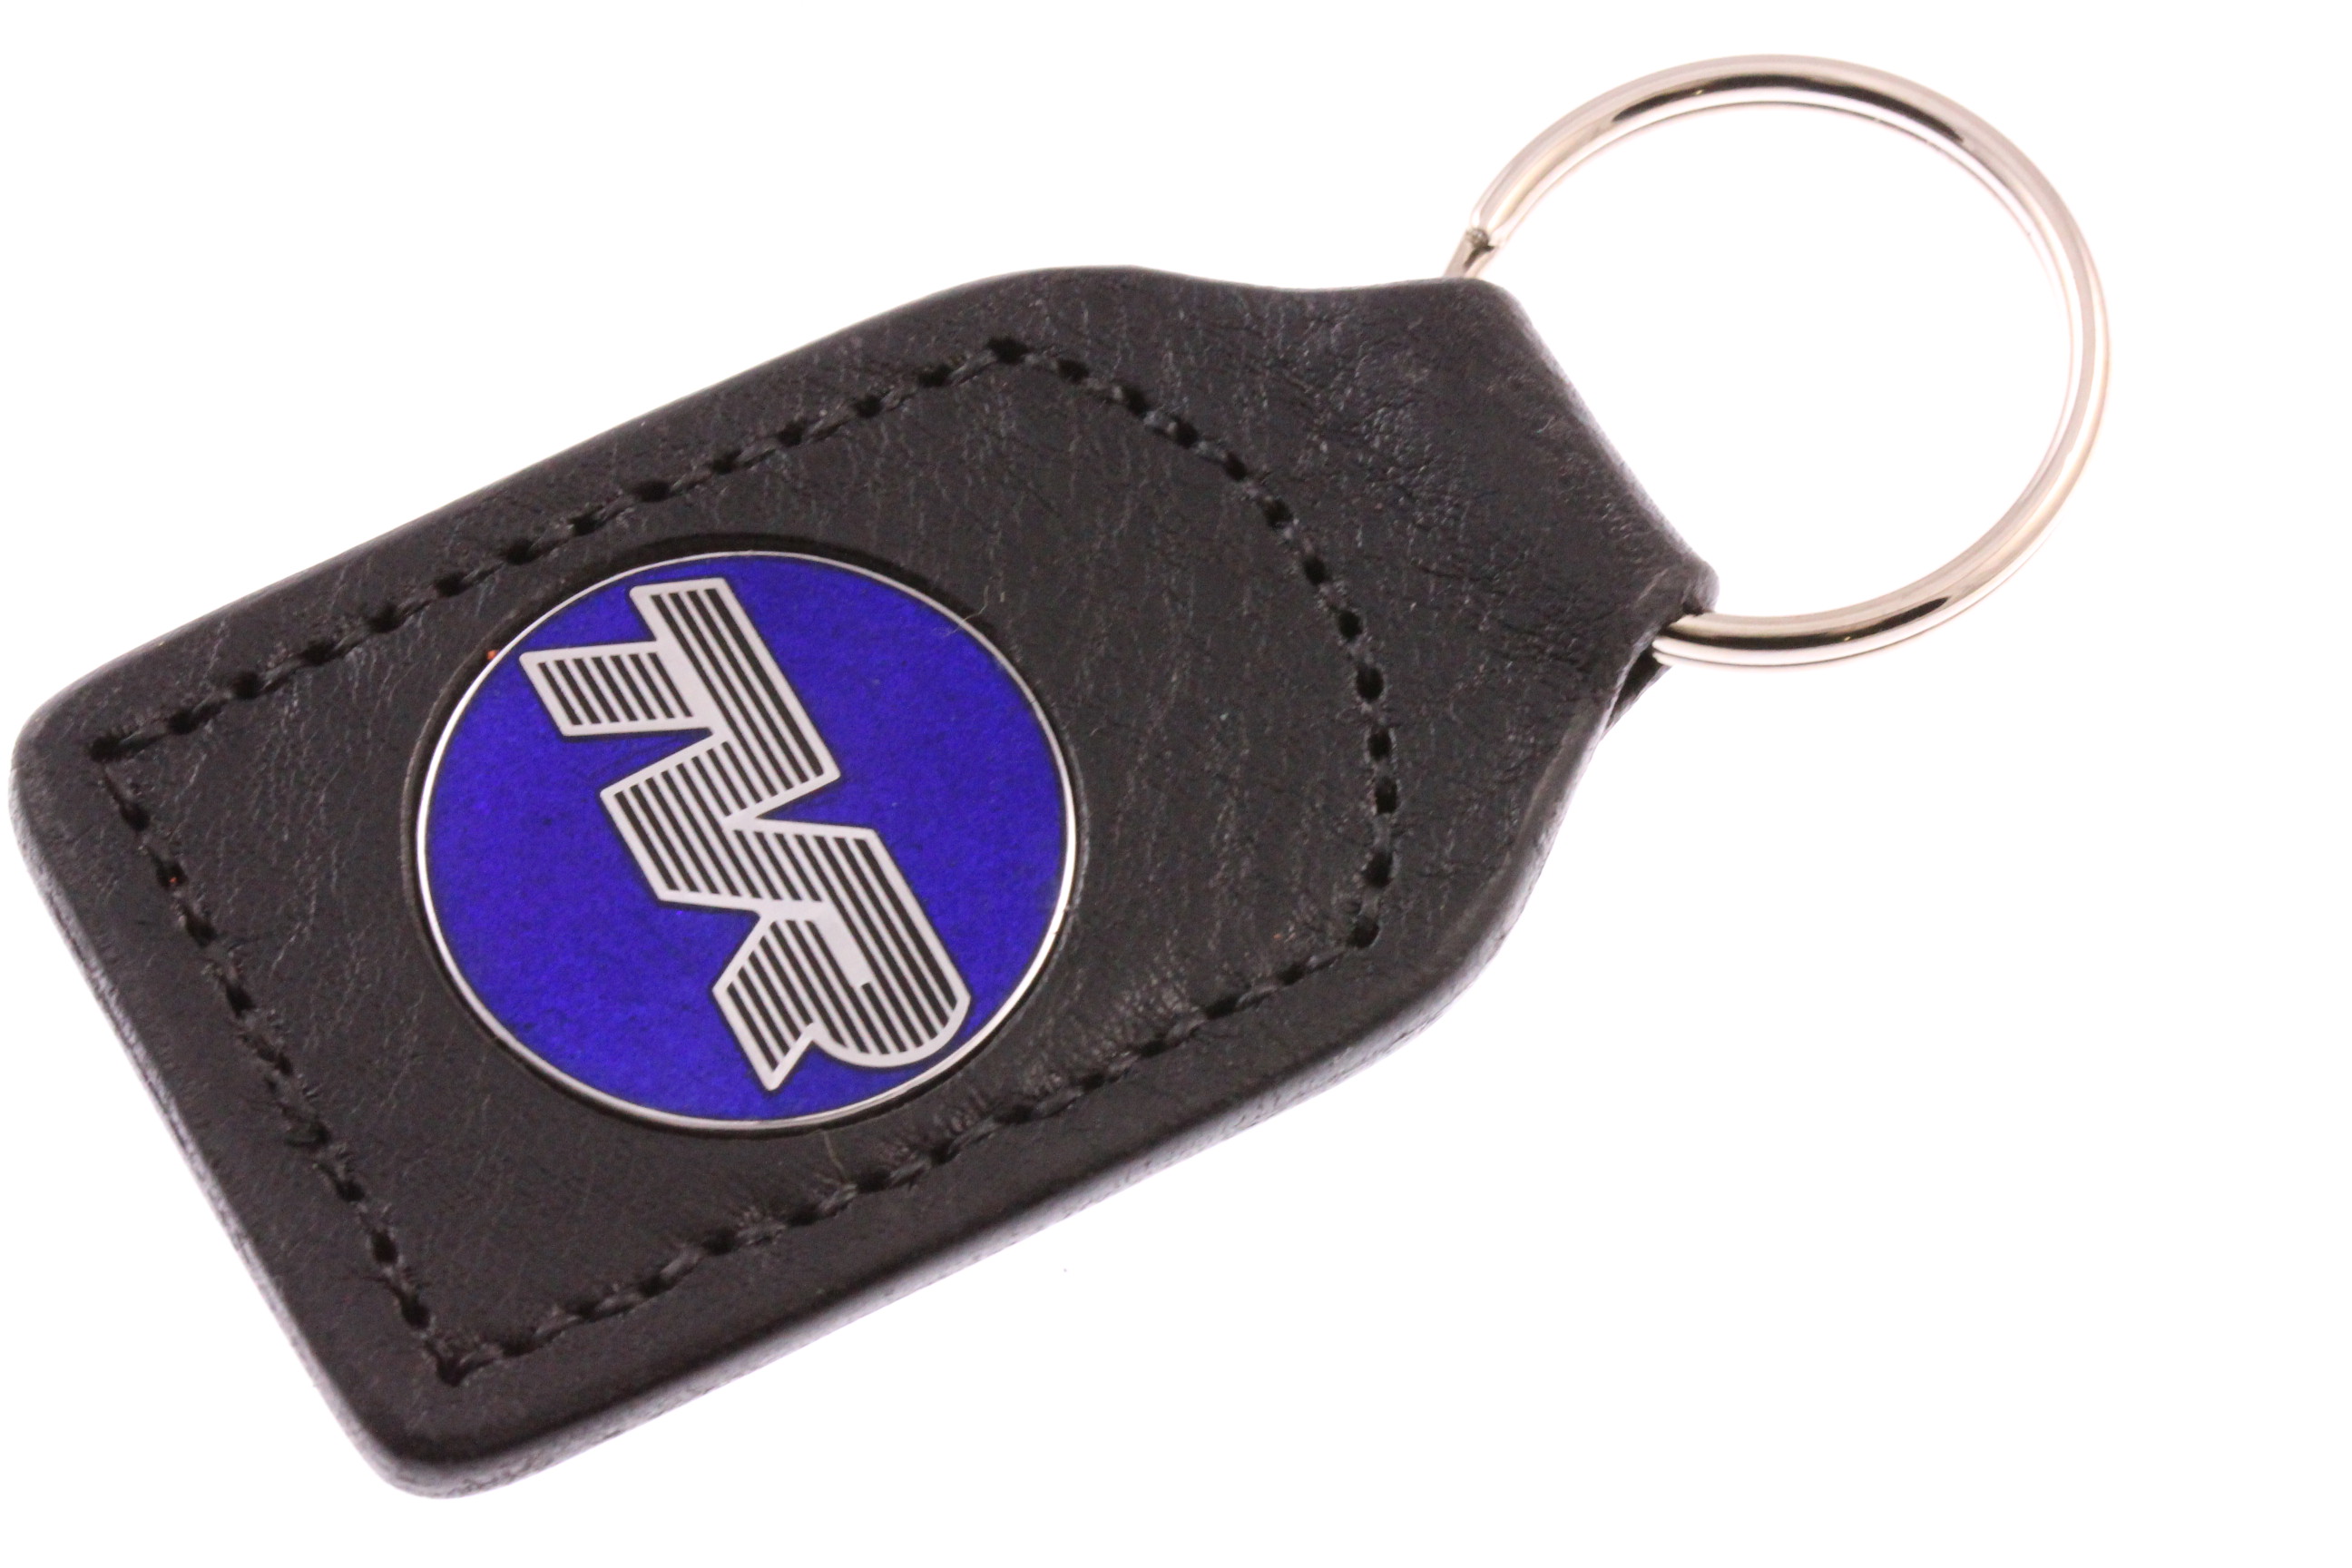 TVR - classic blue badge keyring